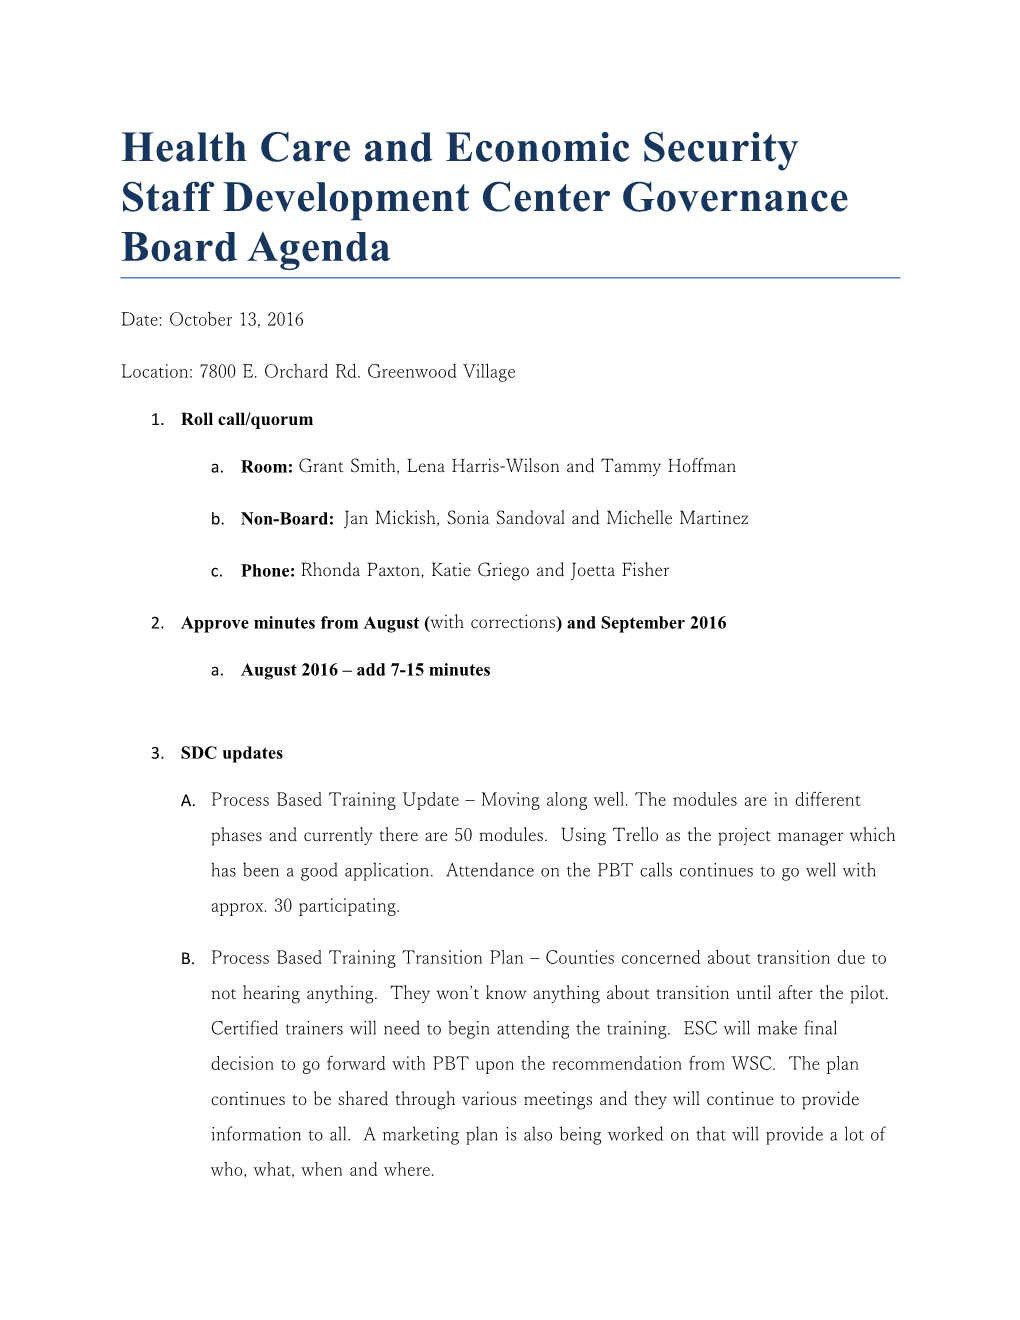 Health Care and Economic Security Staff Development Center Governance Board Agenda